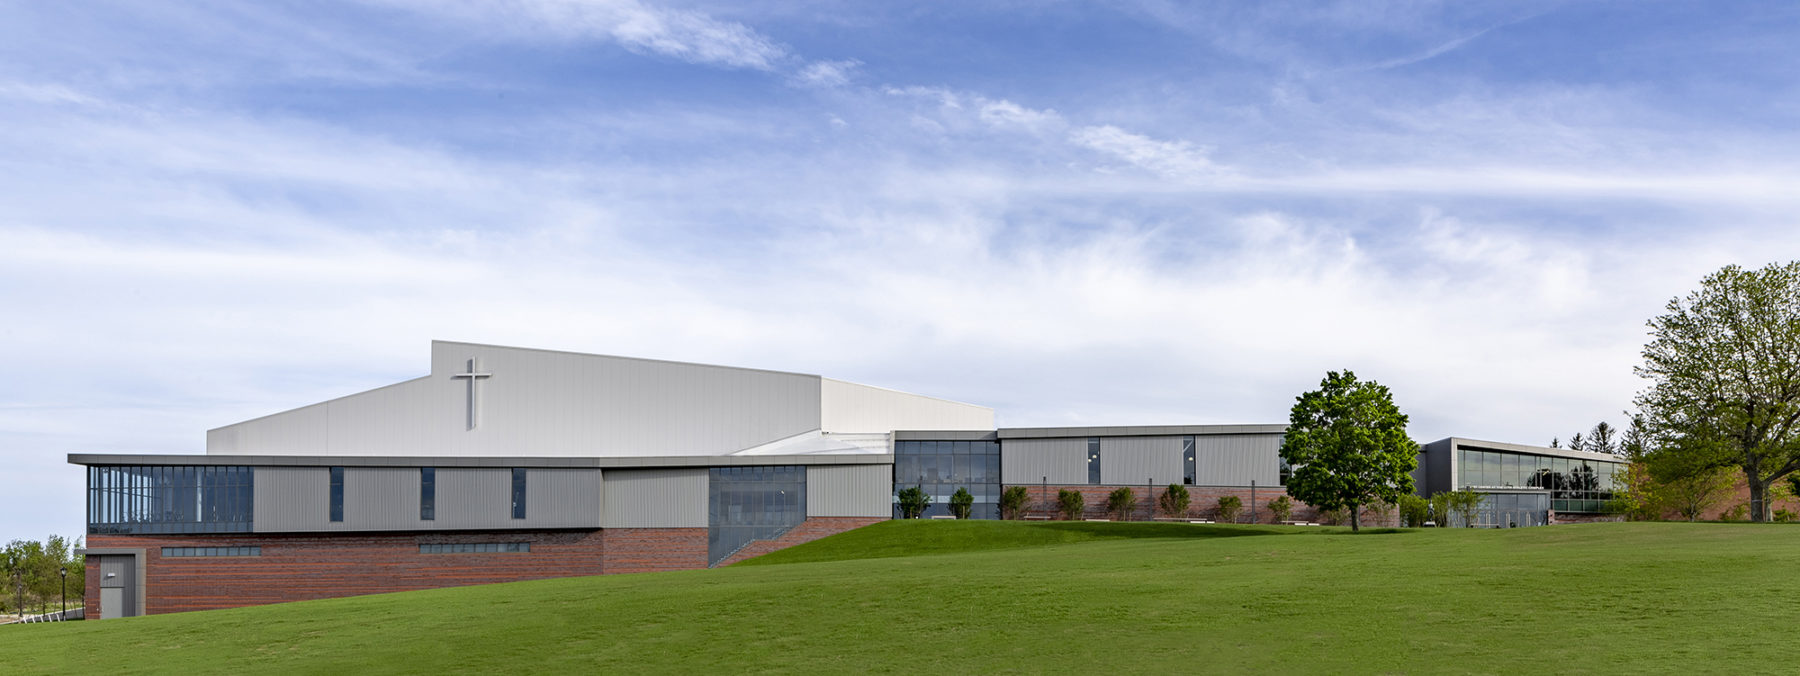 exterior of facility